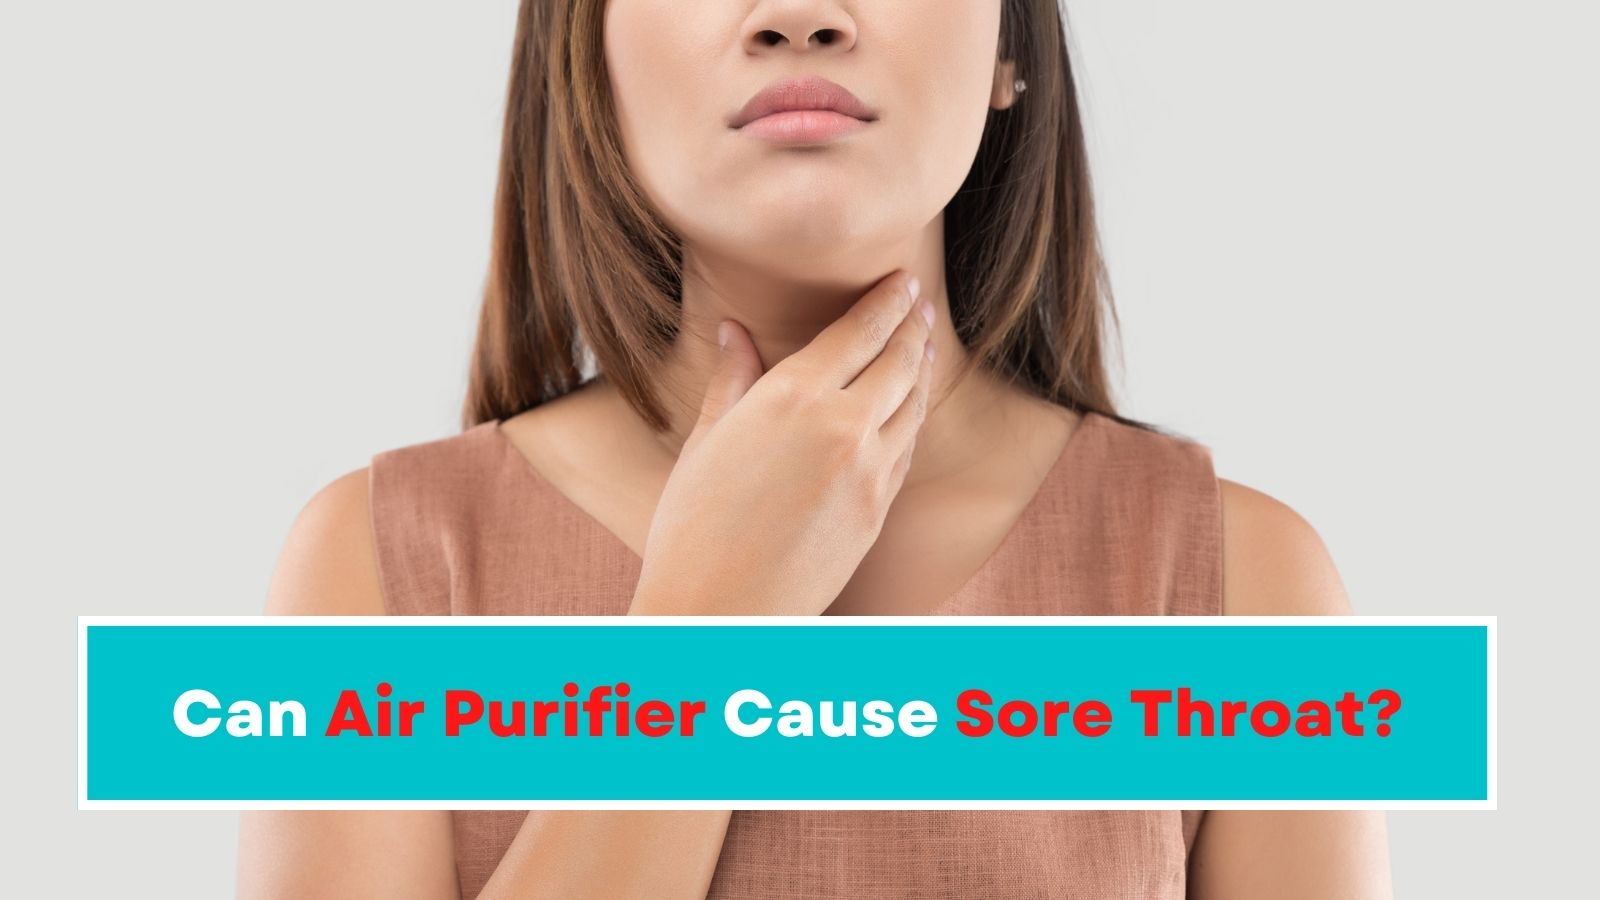 Can Air Purifier Cause Sore Throat?